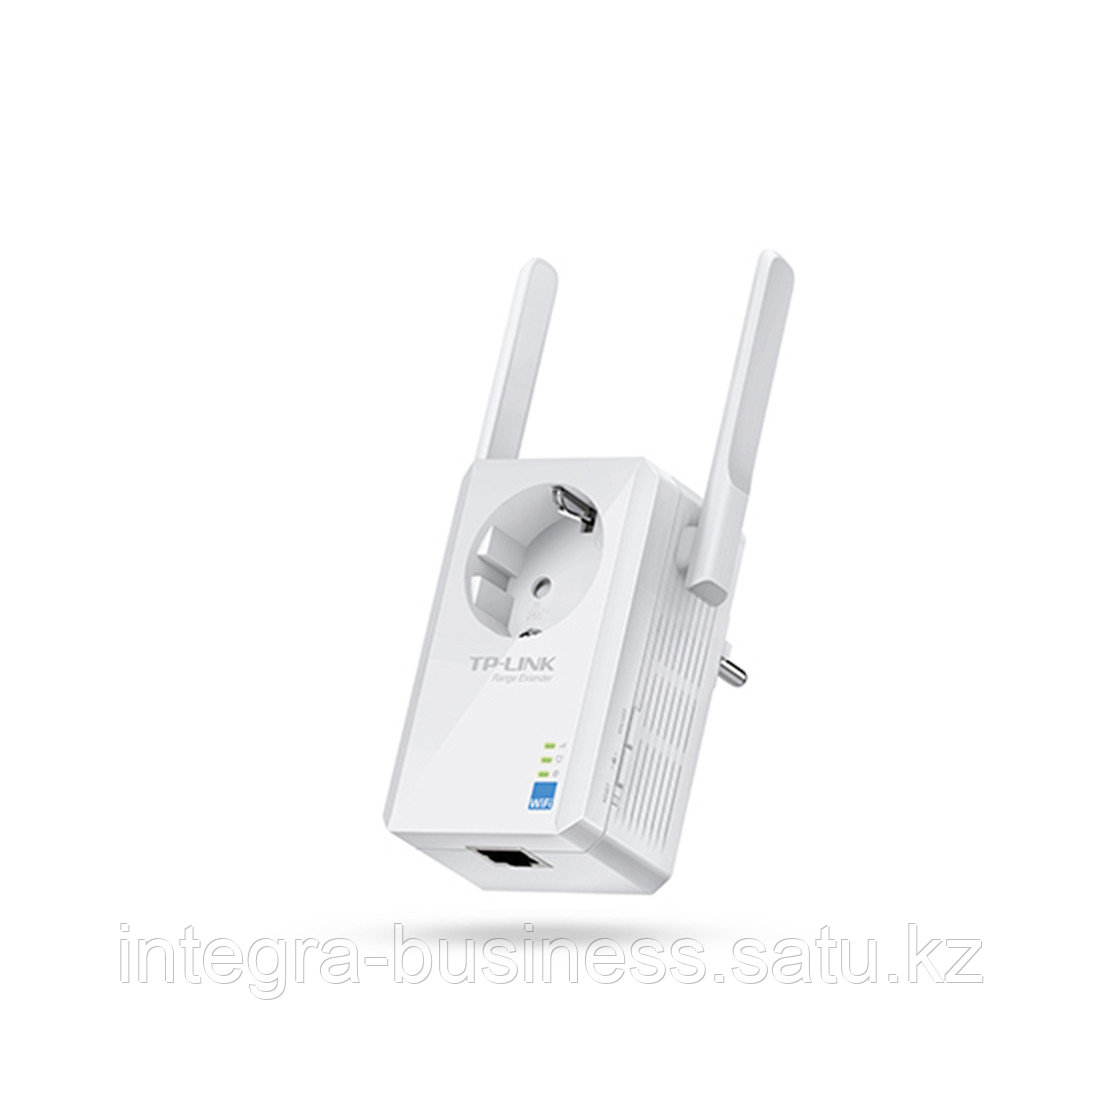 Усилитель Wi-Fi сигнала TP-Link TL-WA860RE, фото 1